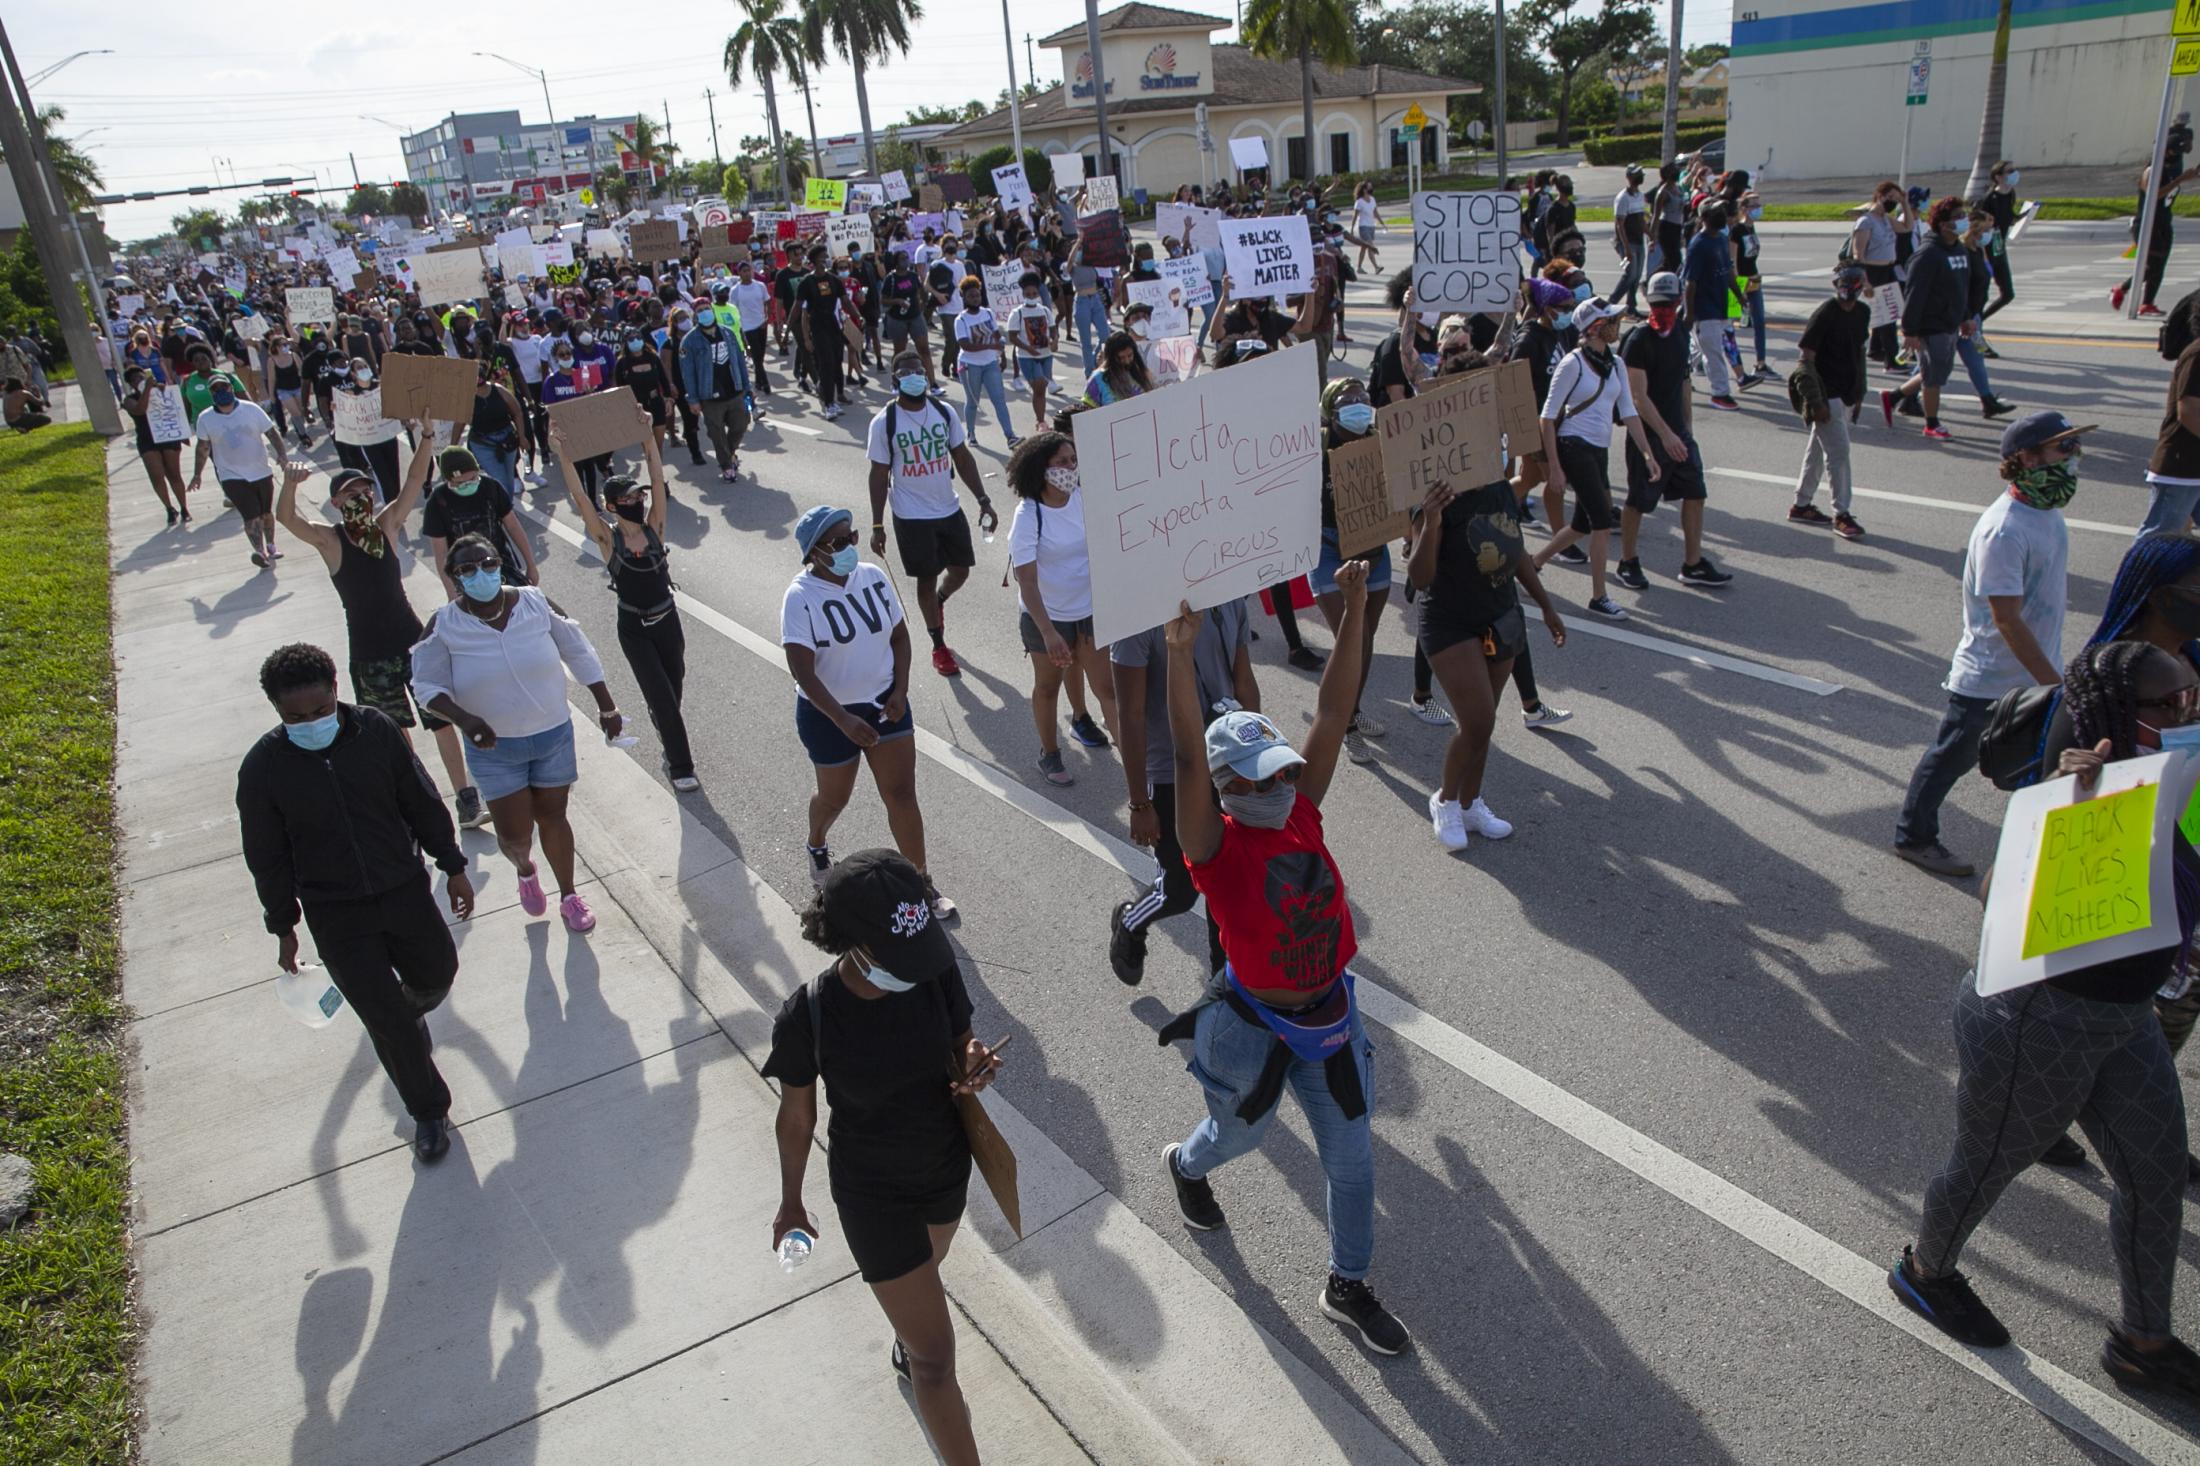 George Floyd Ft. Lauderdale Protest - 